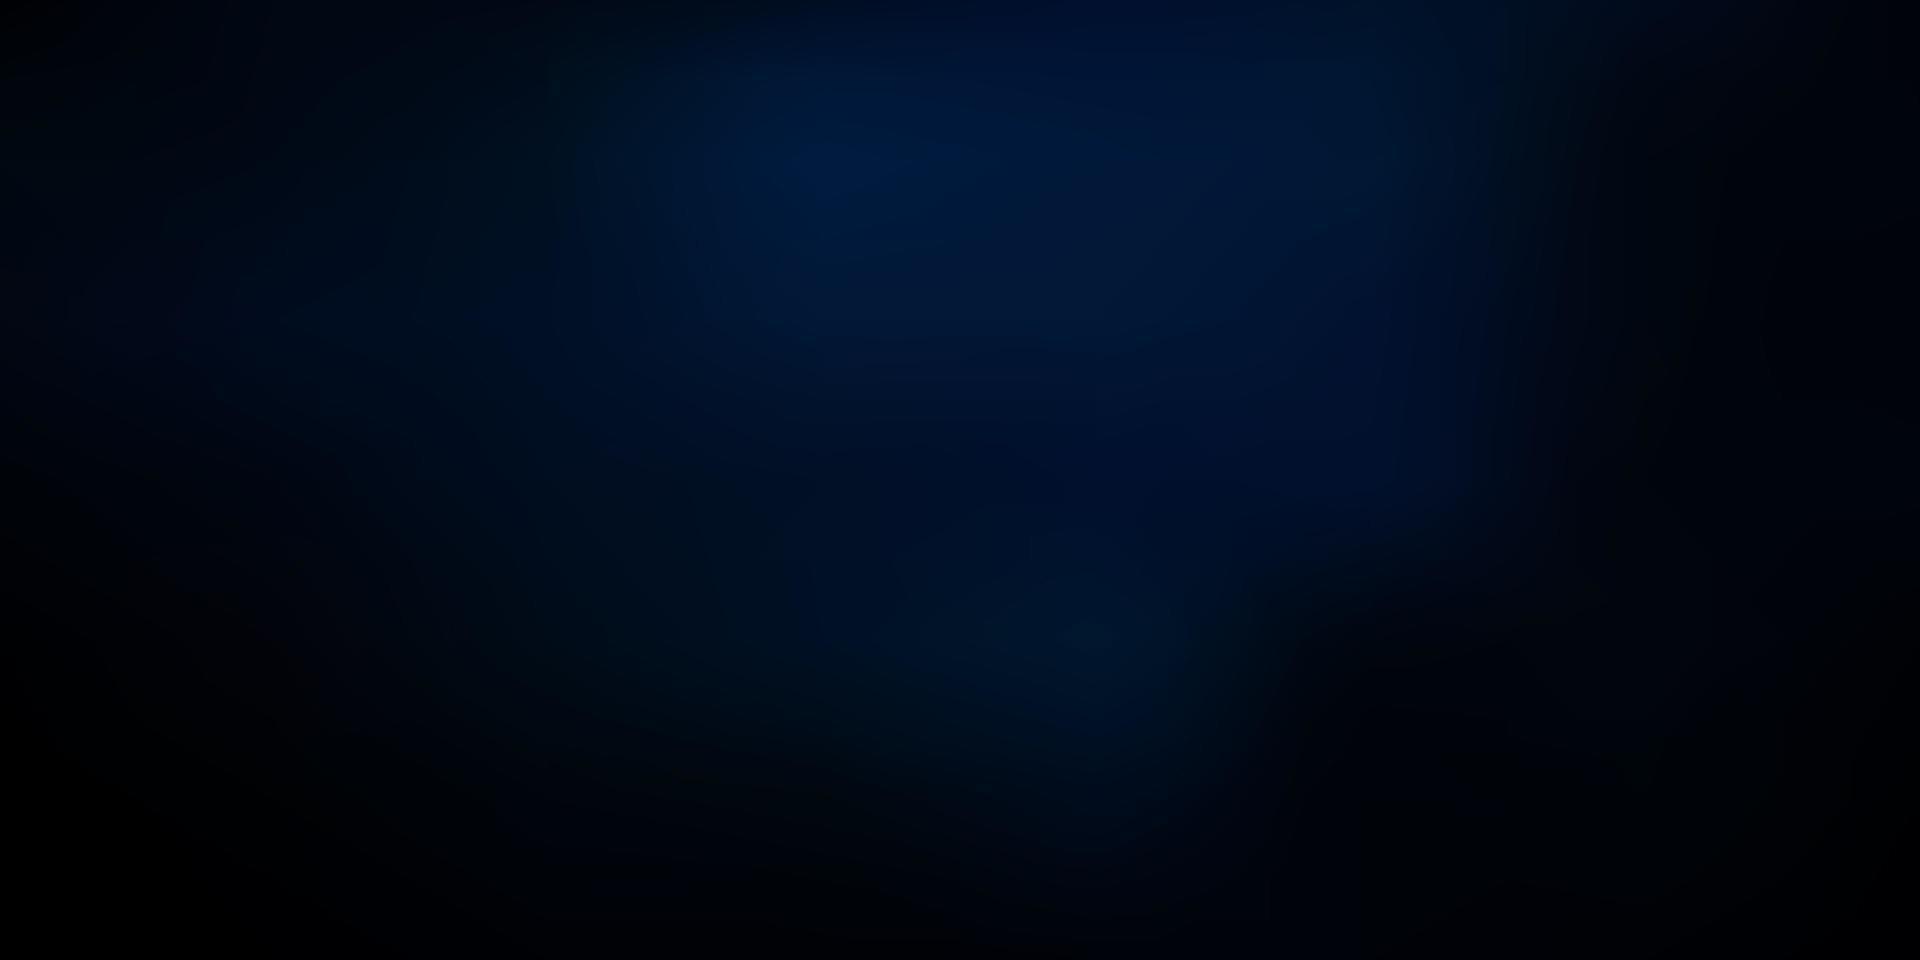 Dark blue vector abstract blur drawing.